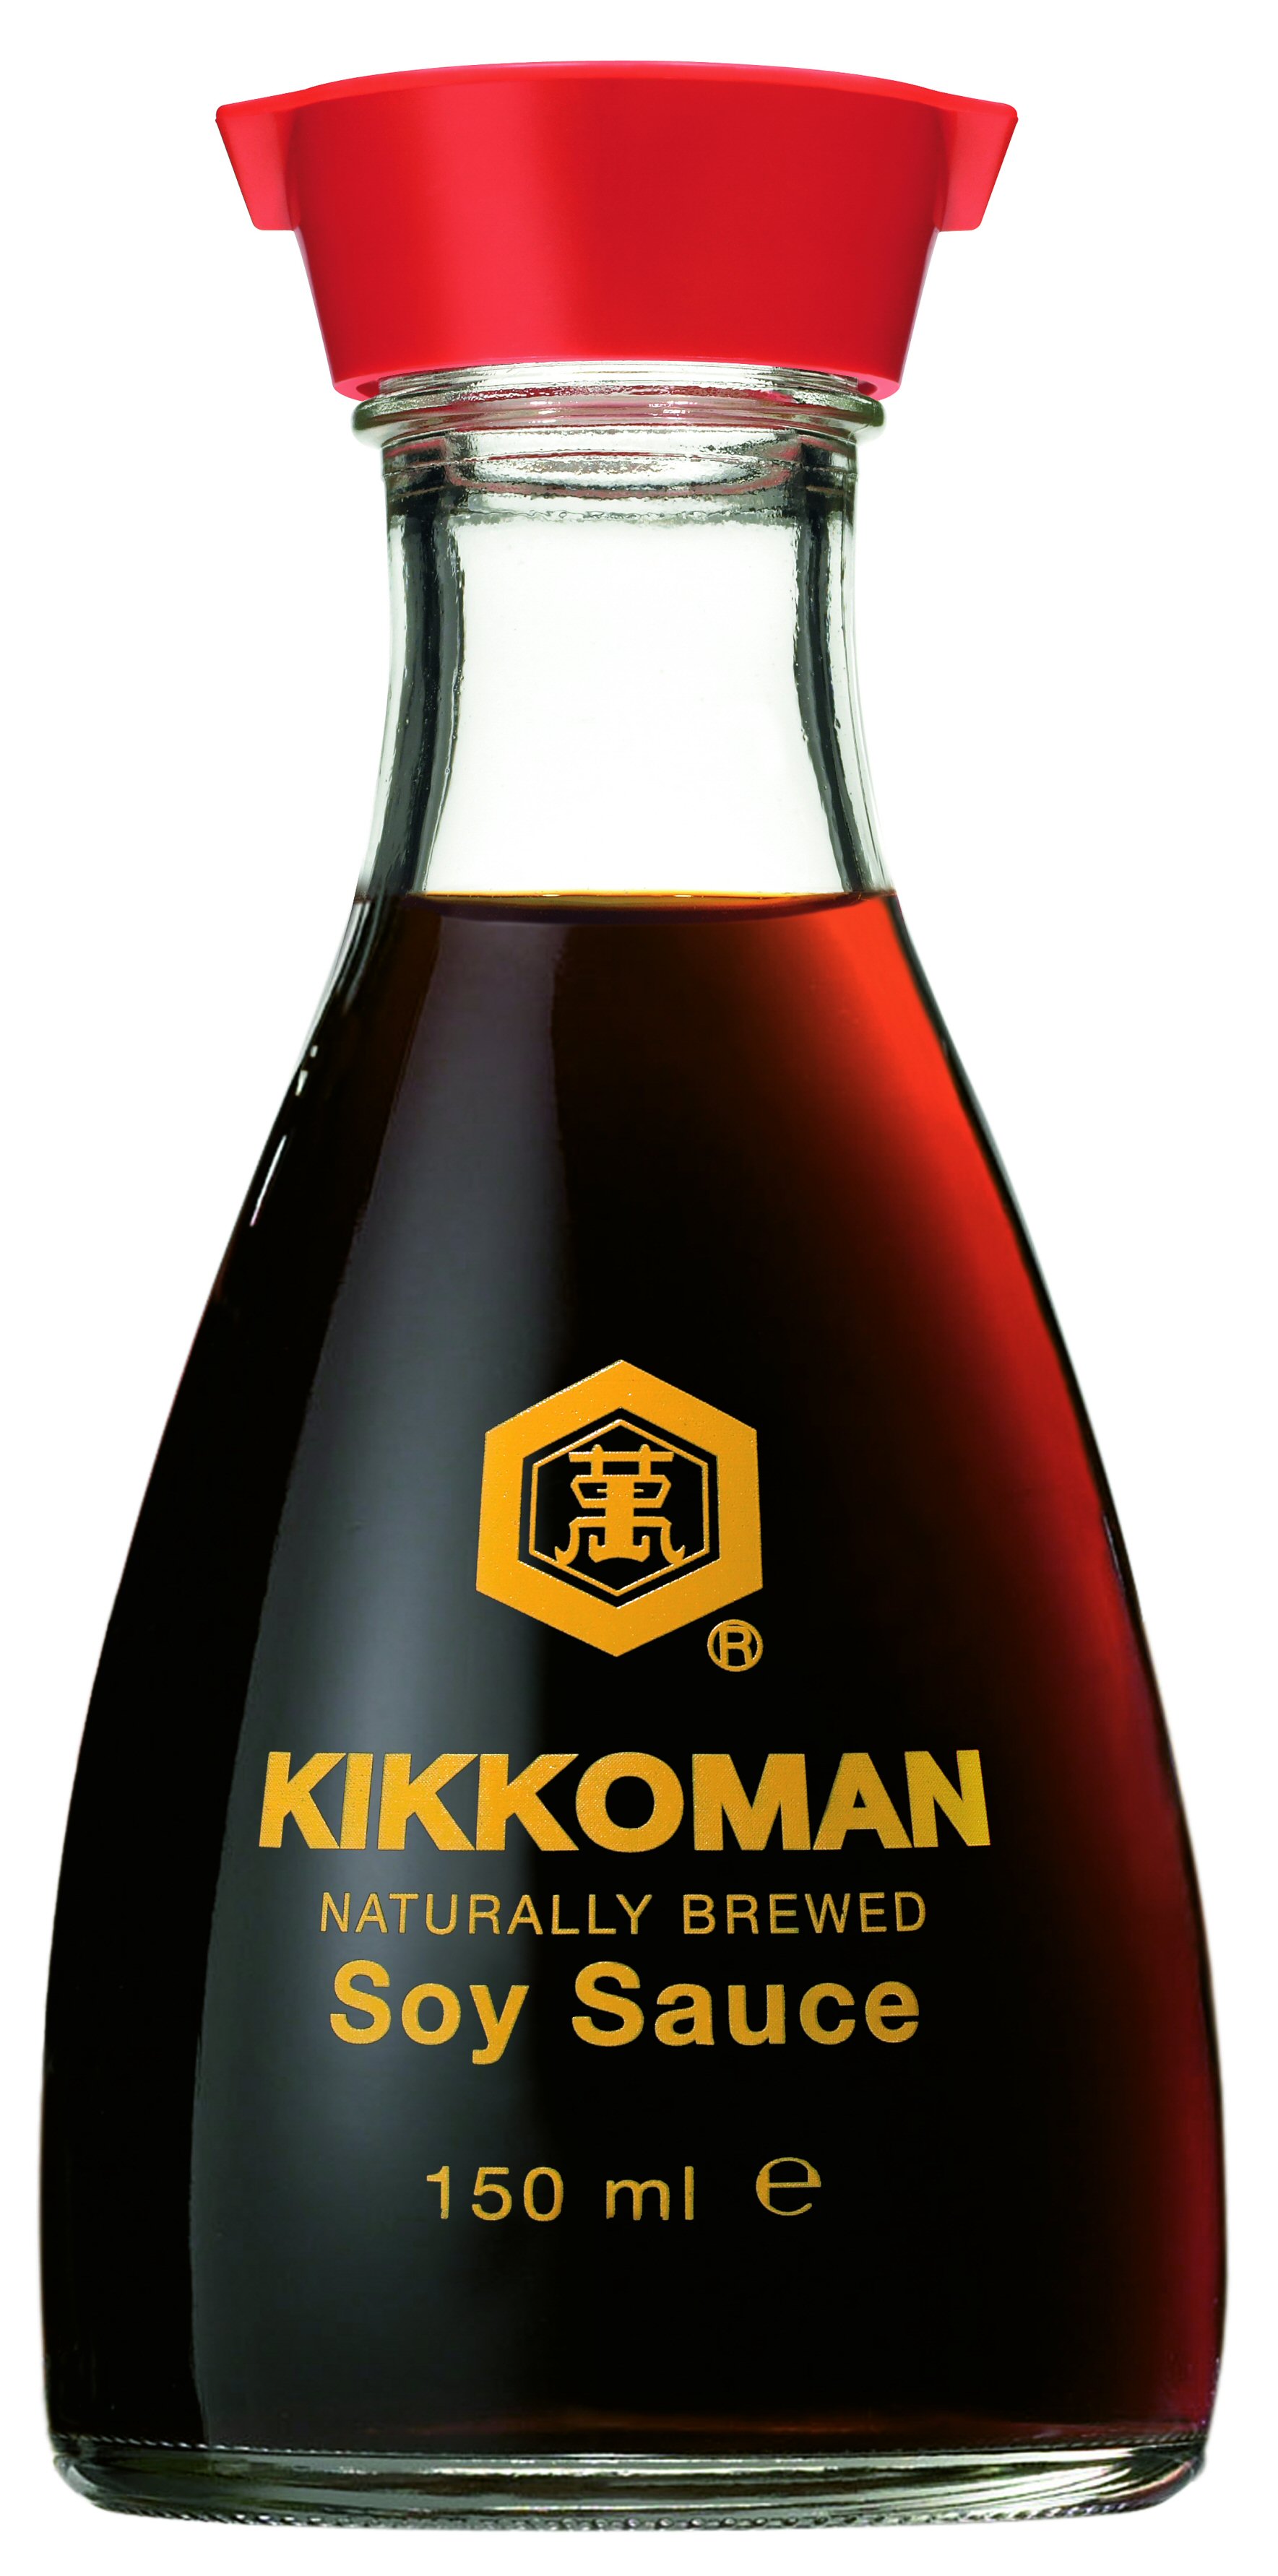 Soy sauce promotion from Kikkoman